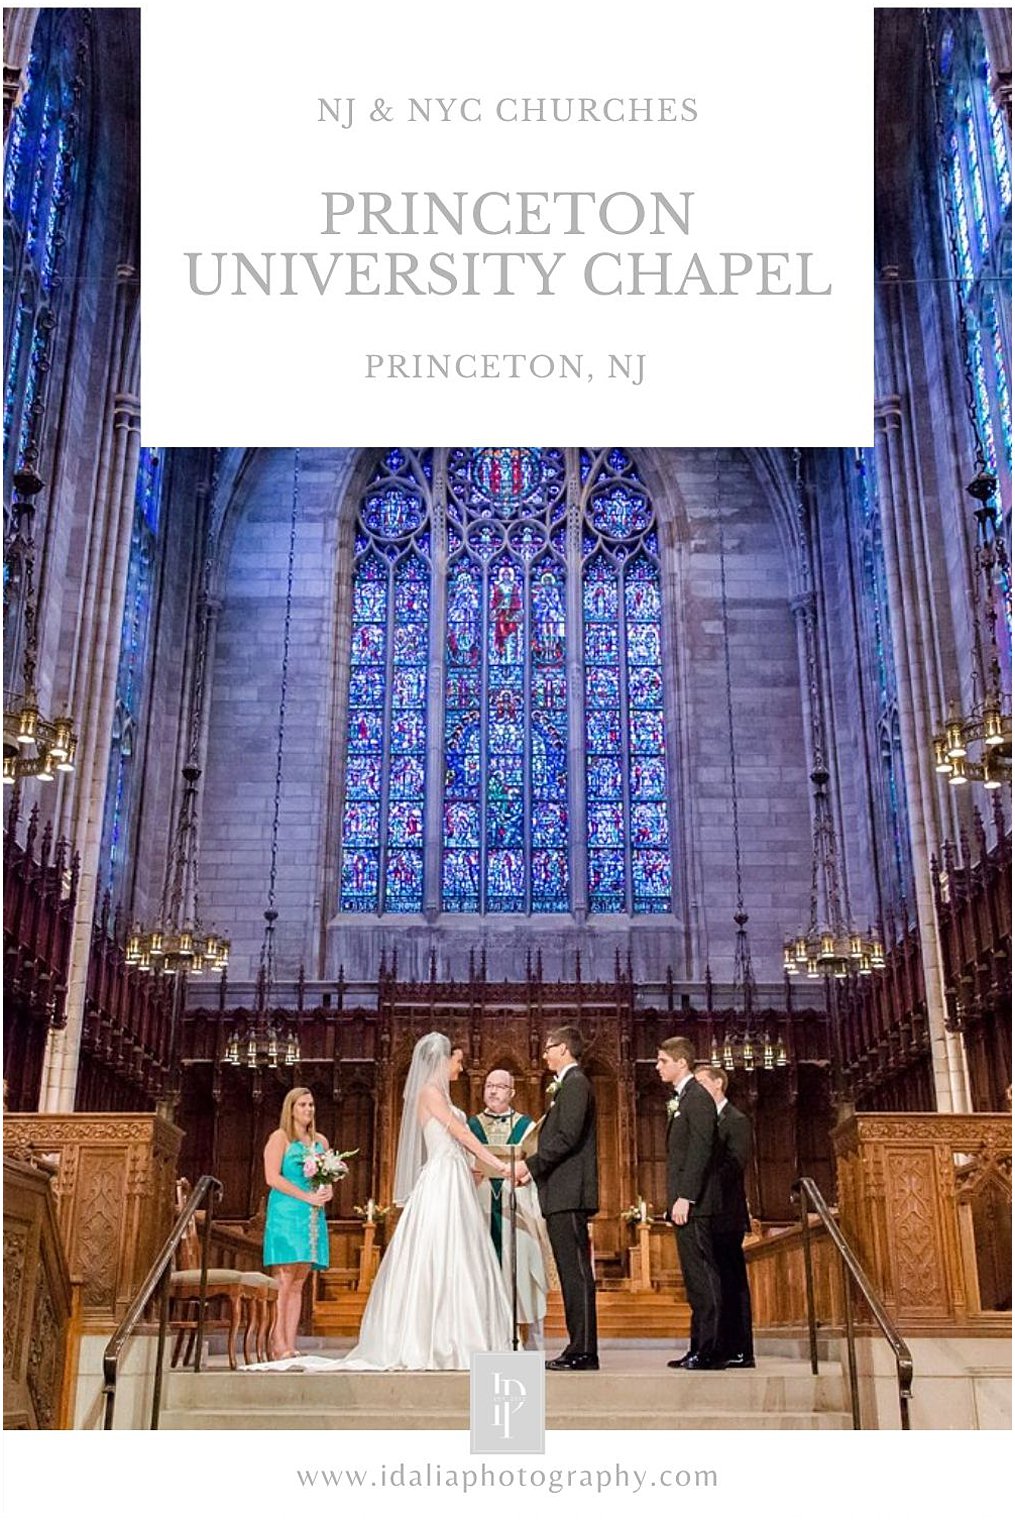 Wedding ceremony at Princeton University Chapel